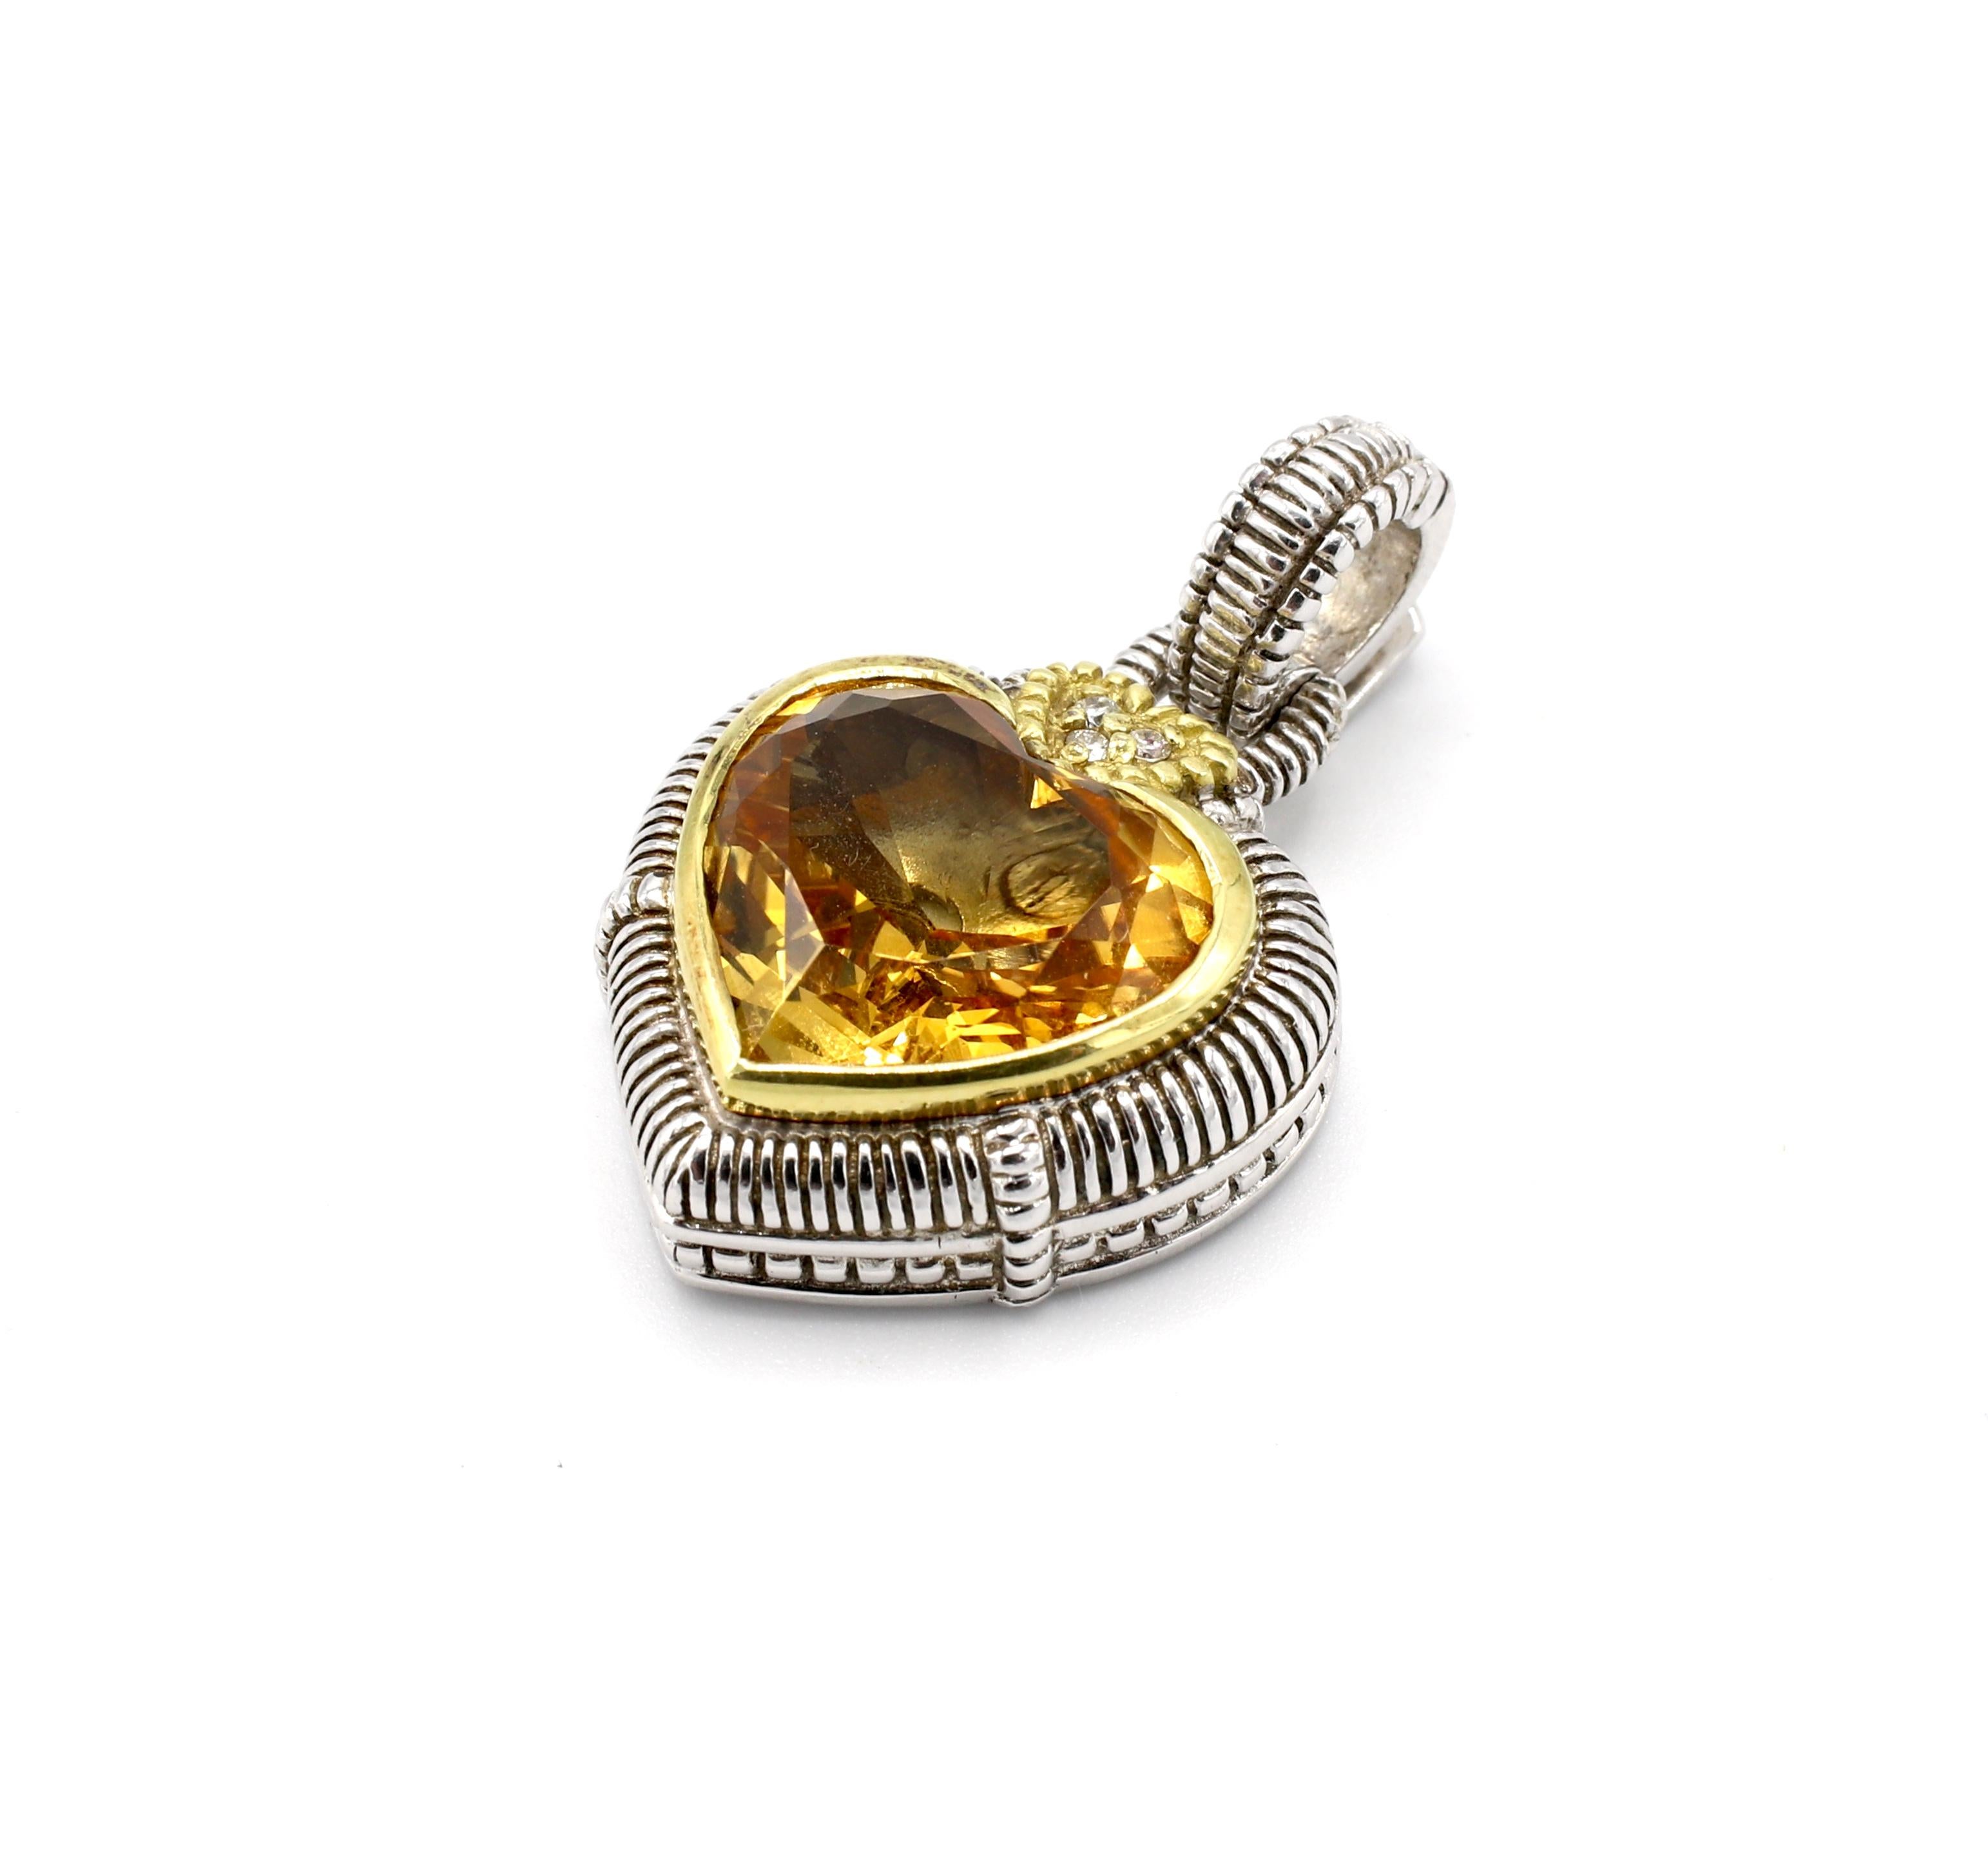 Contemporary Judith Ripka Diamond & Citrine Heart Sterling Silver & 18K Gold Pendant Necklace